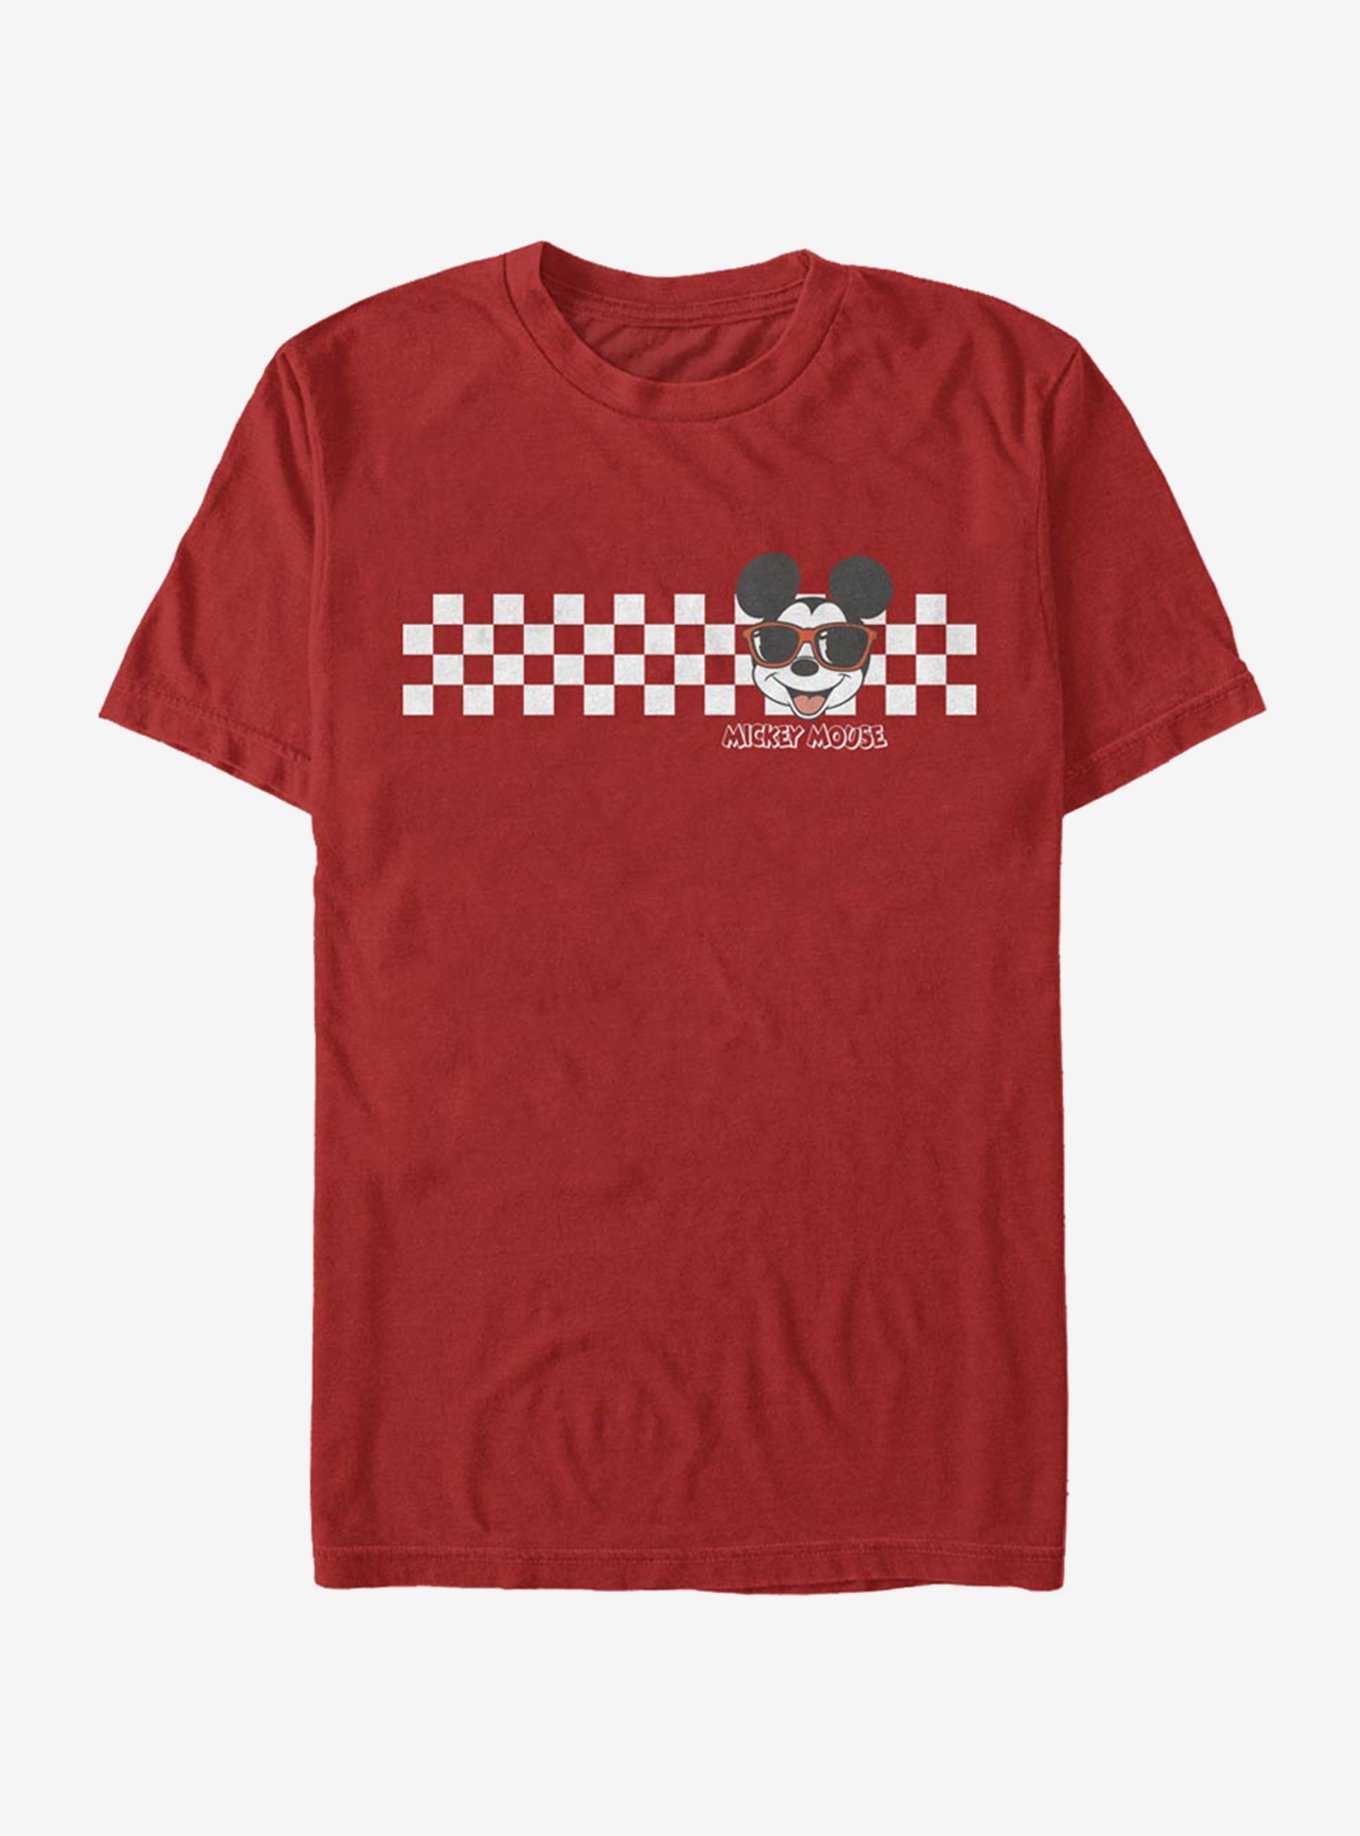 Disney Mickey Mouse Checkers T-Shirt, , hi-res